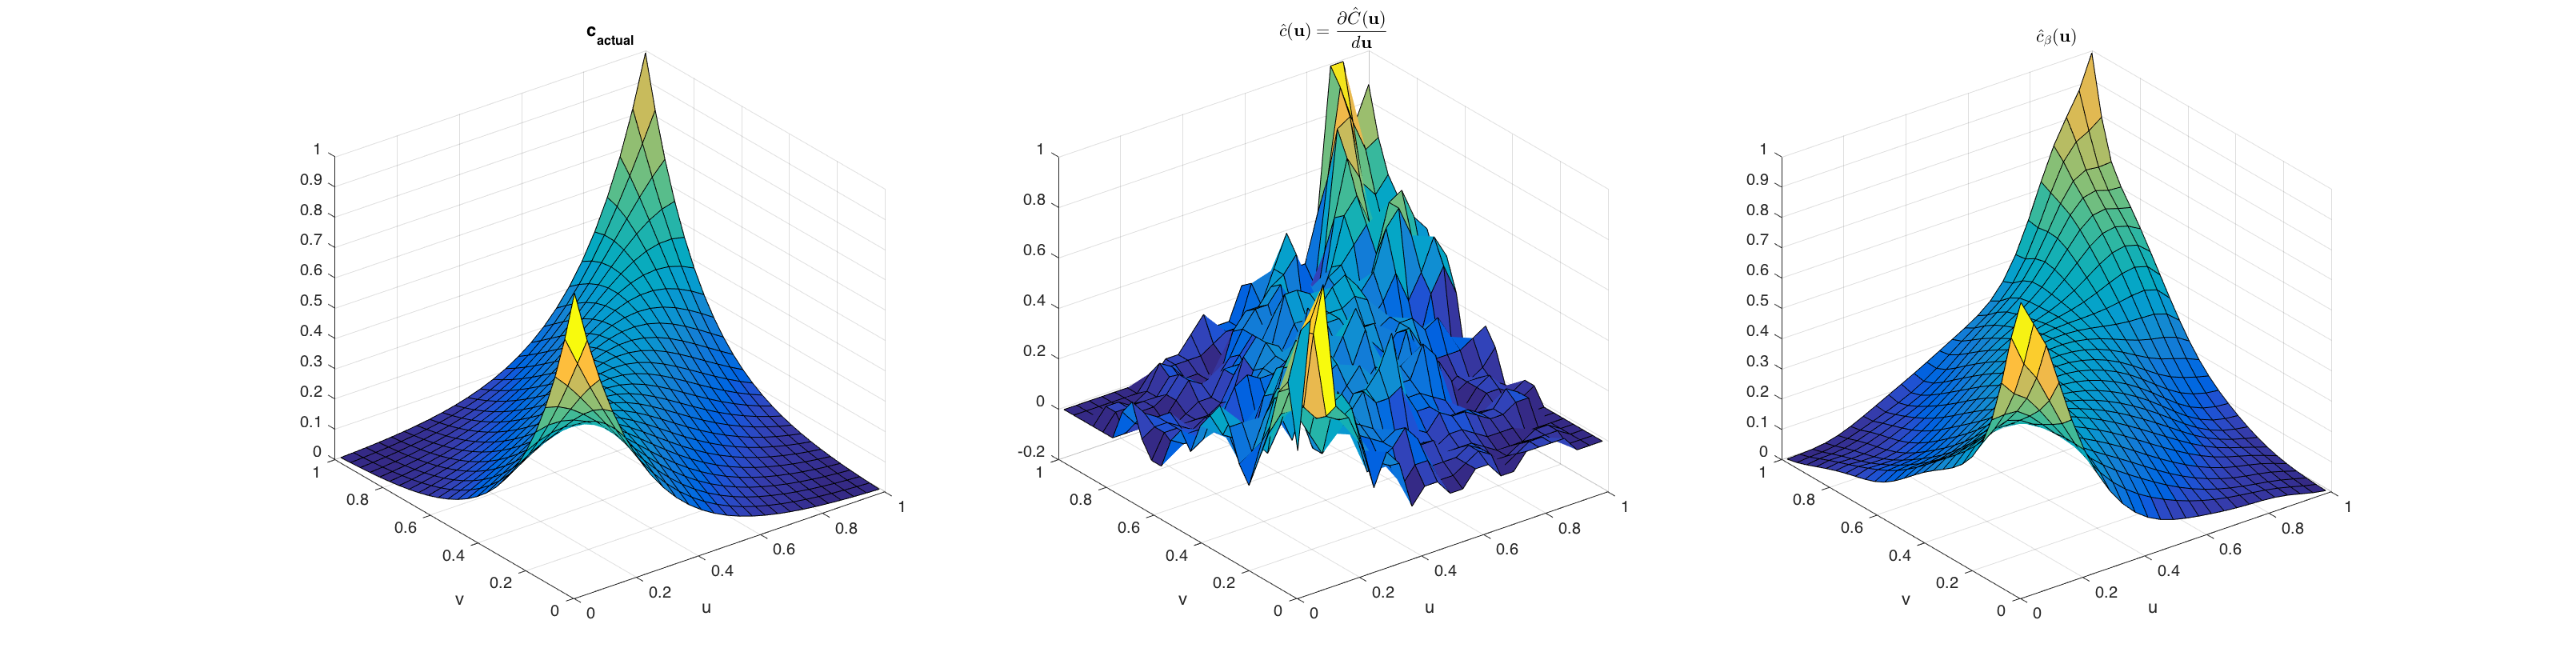 Comparison of Empirical Copula Density Estimation Methods